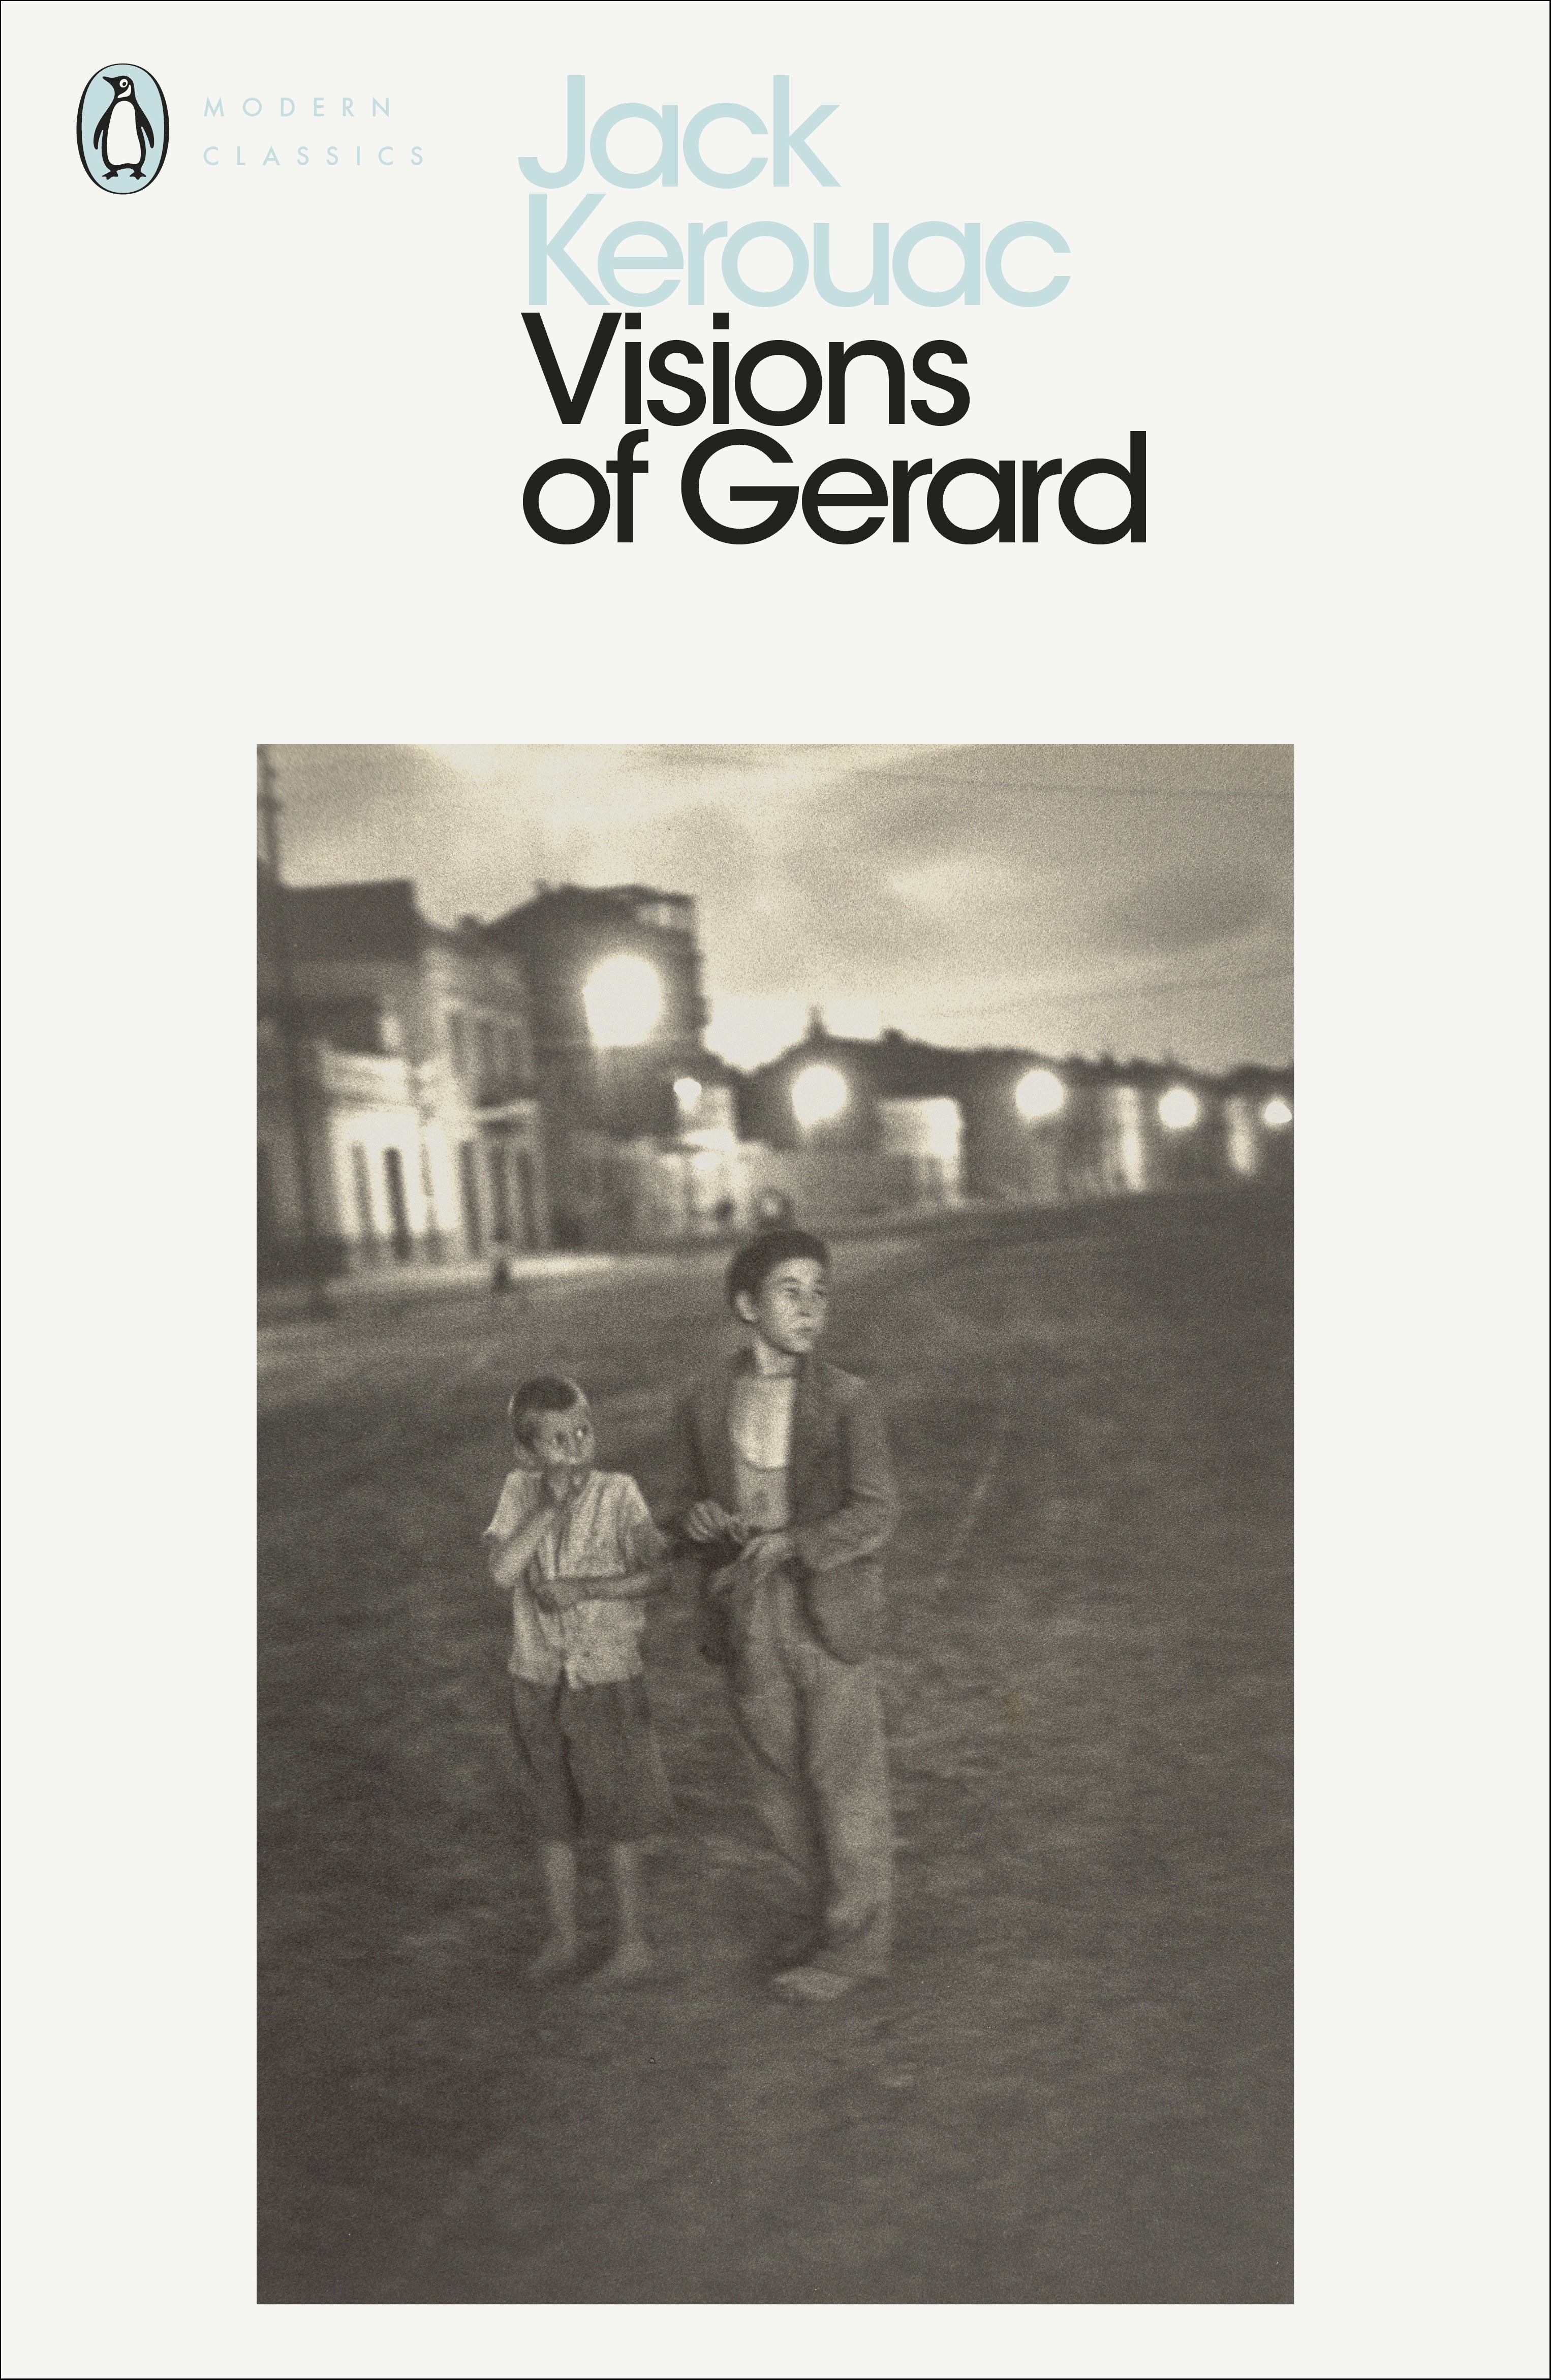 Book “Visions of Gerard” by Jack Kerouac — August 20, 2020